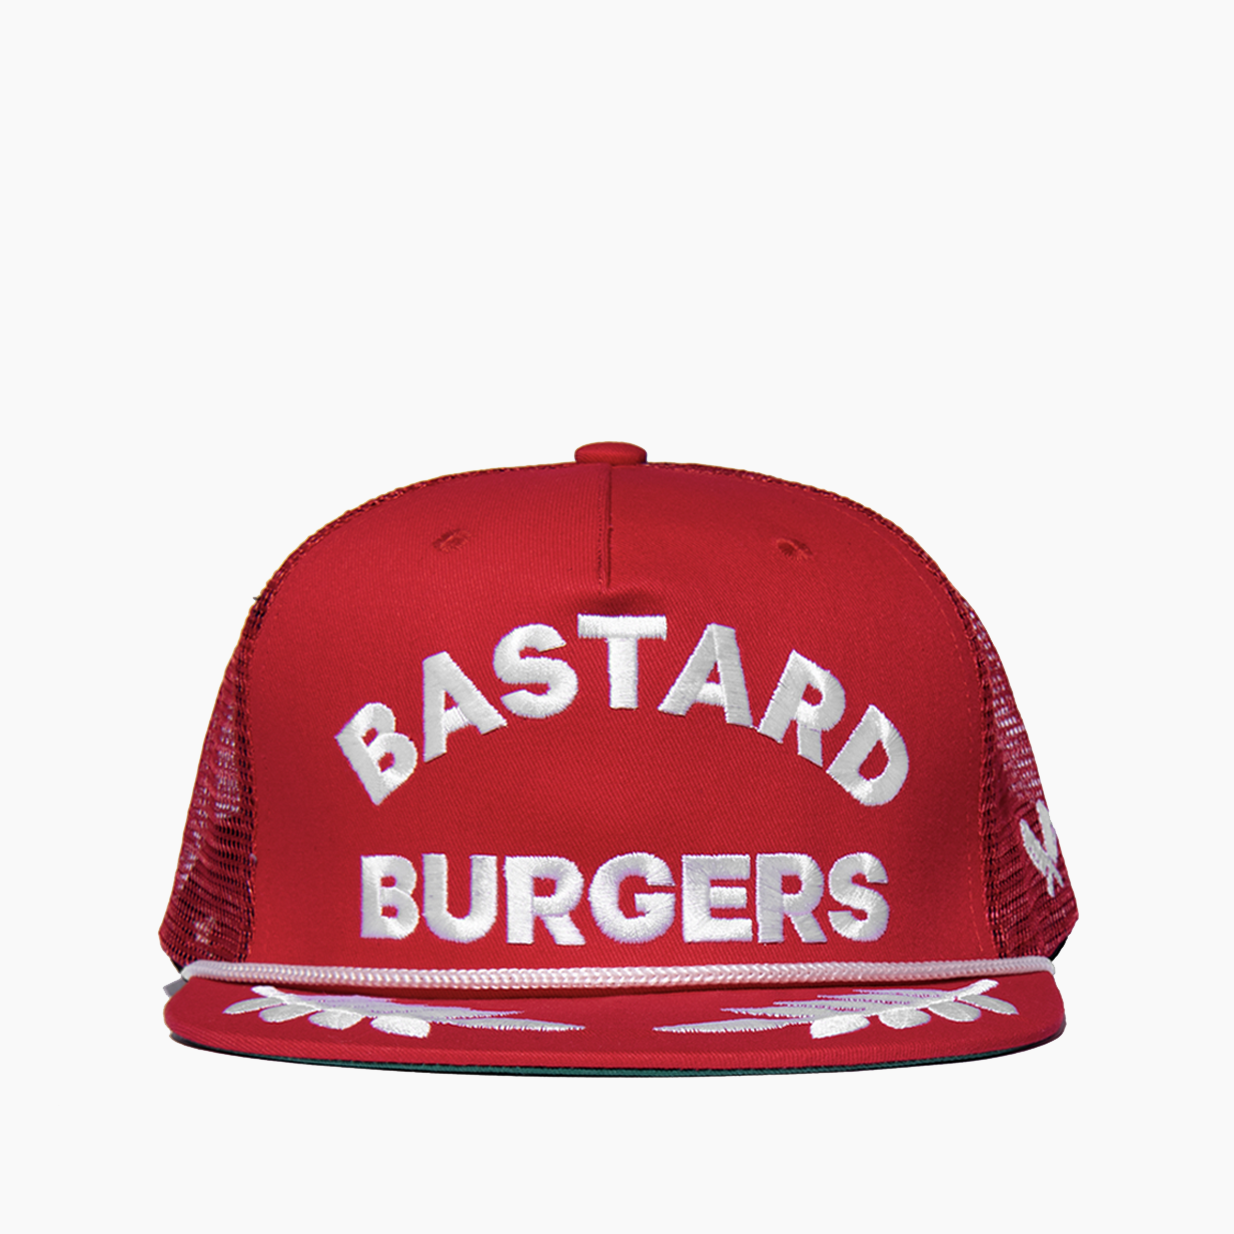 Bastard Burgers Red Trucker Cap